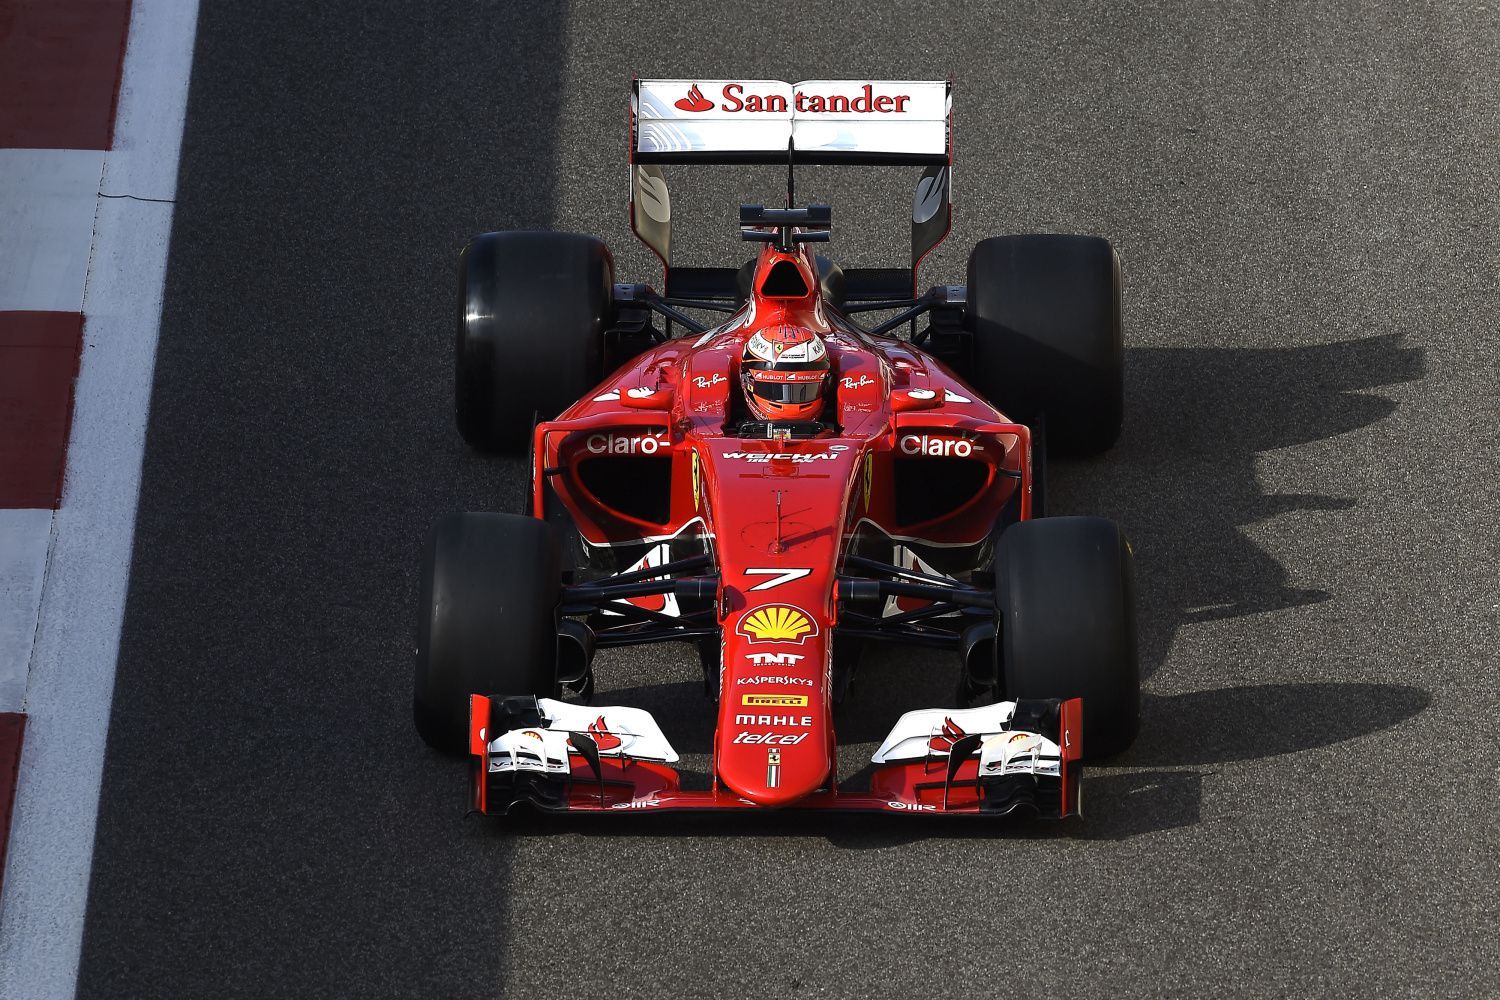 F1: Testy pneumatik Pirelli pro rok 2017 (Ferrari)